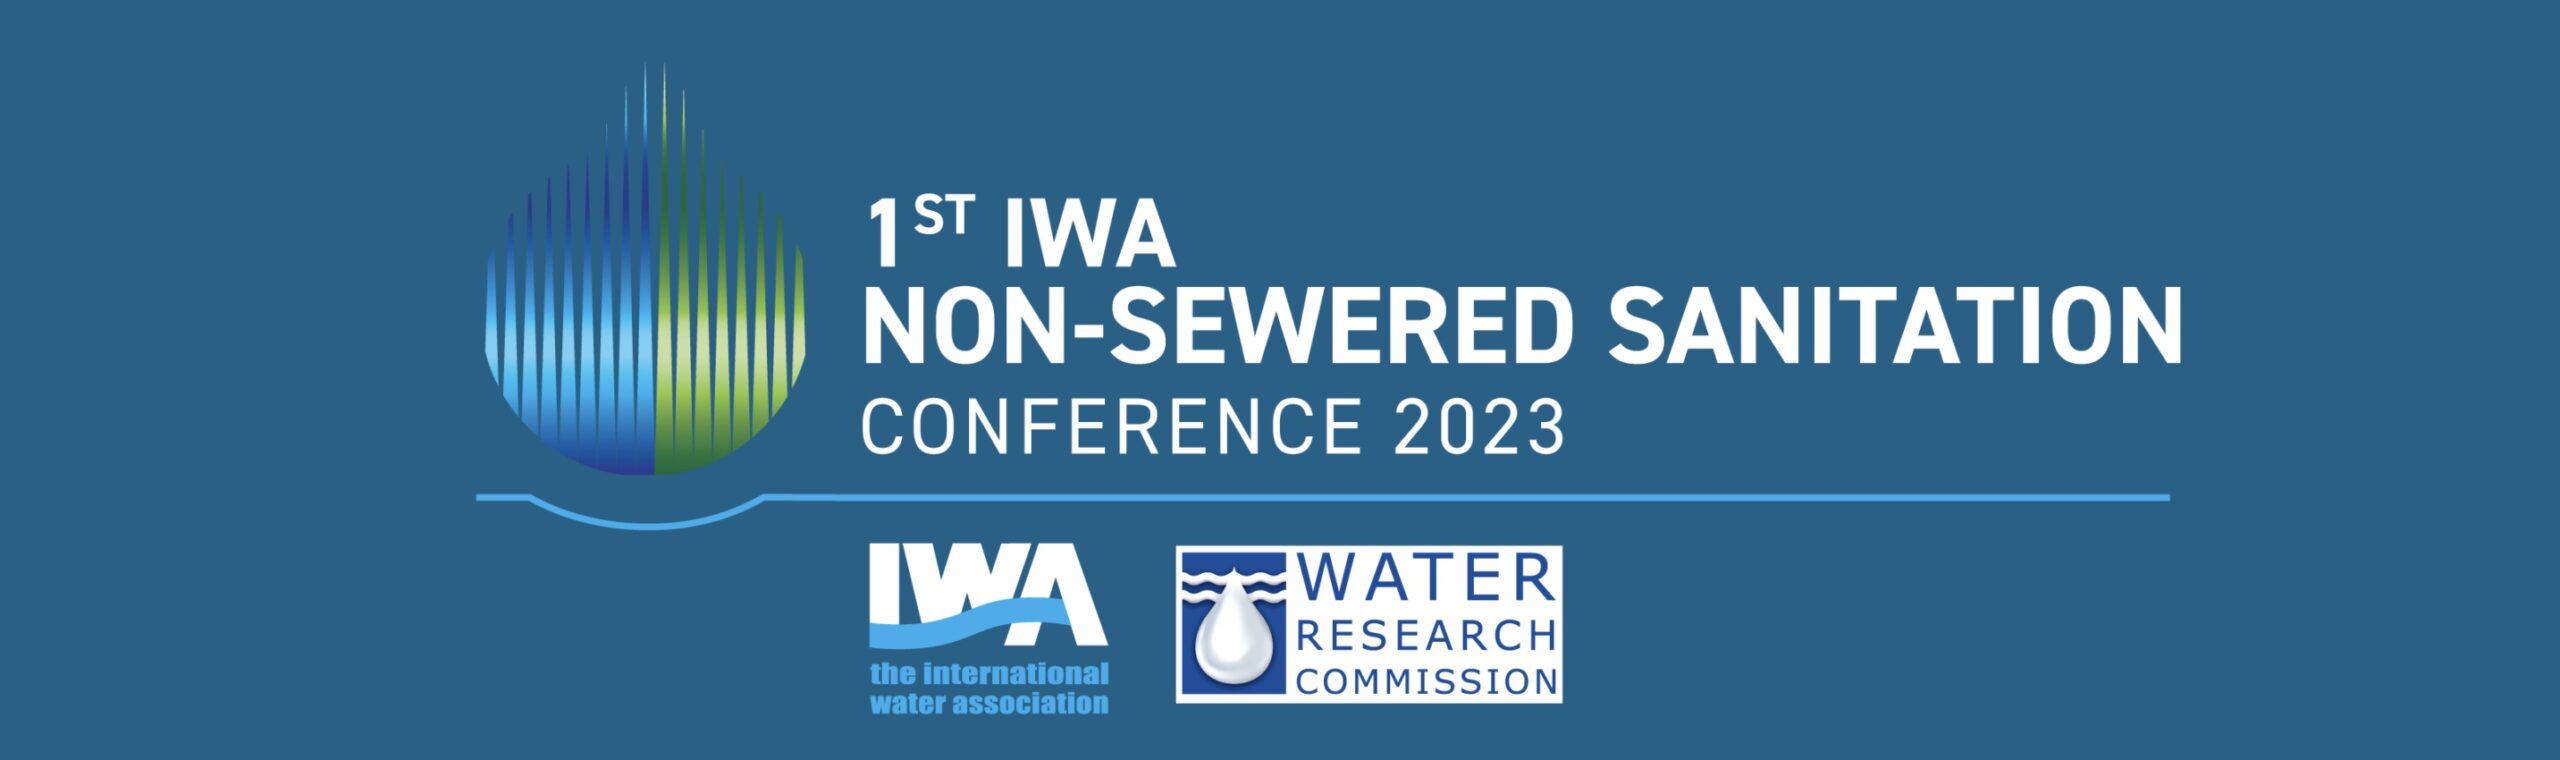 IWA Non-Sewered Sanitation Conference